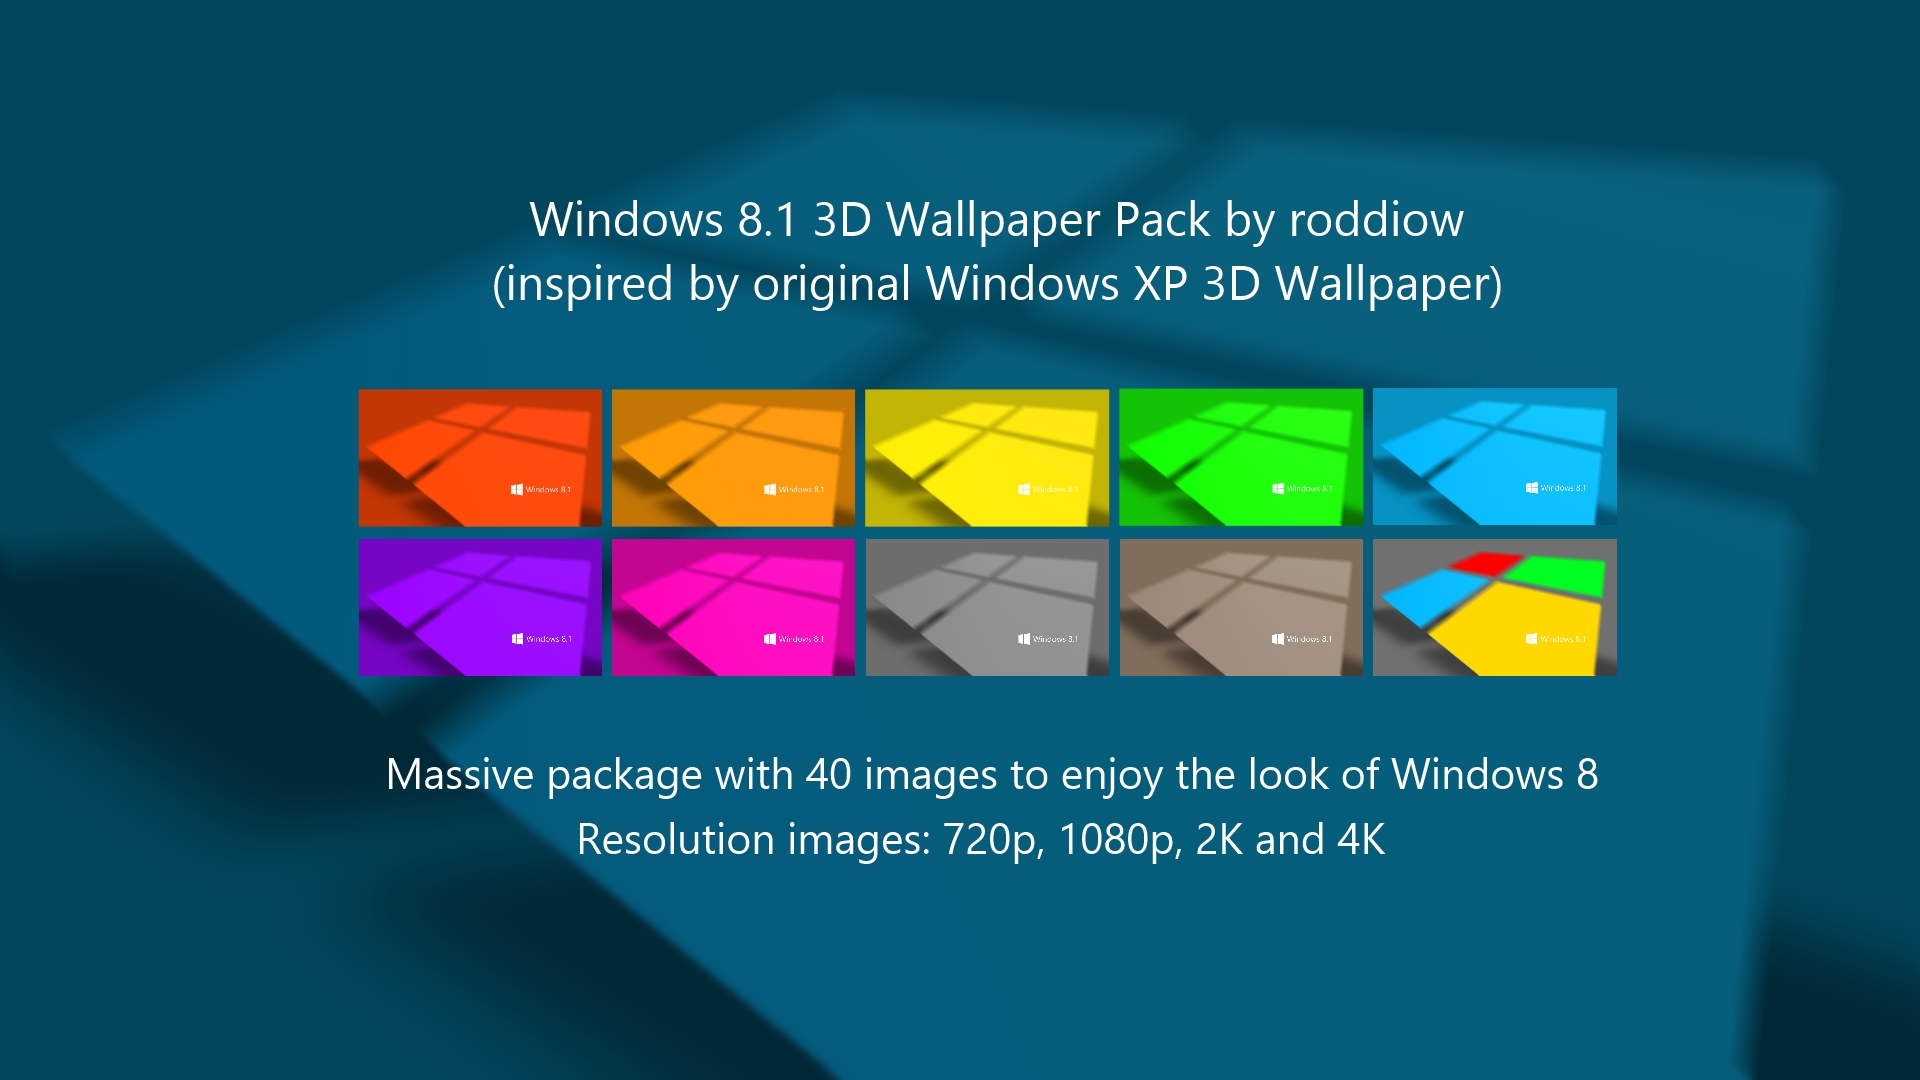 Windows 8.1 3D Wallpaper Pack (by roddiow) by roddiow